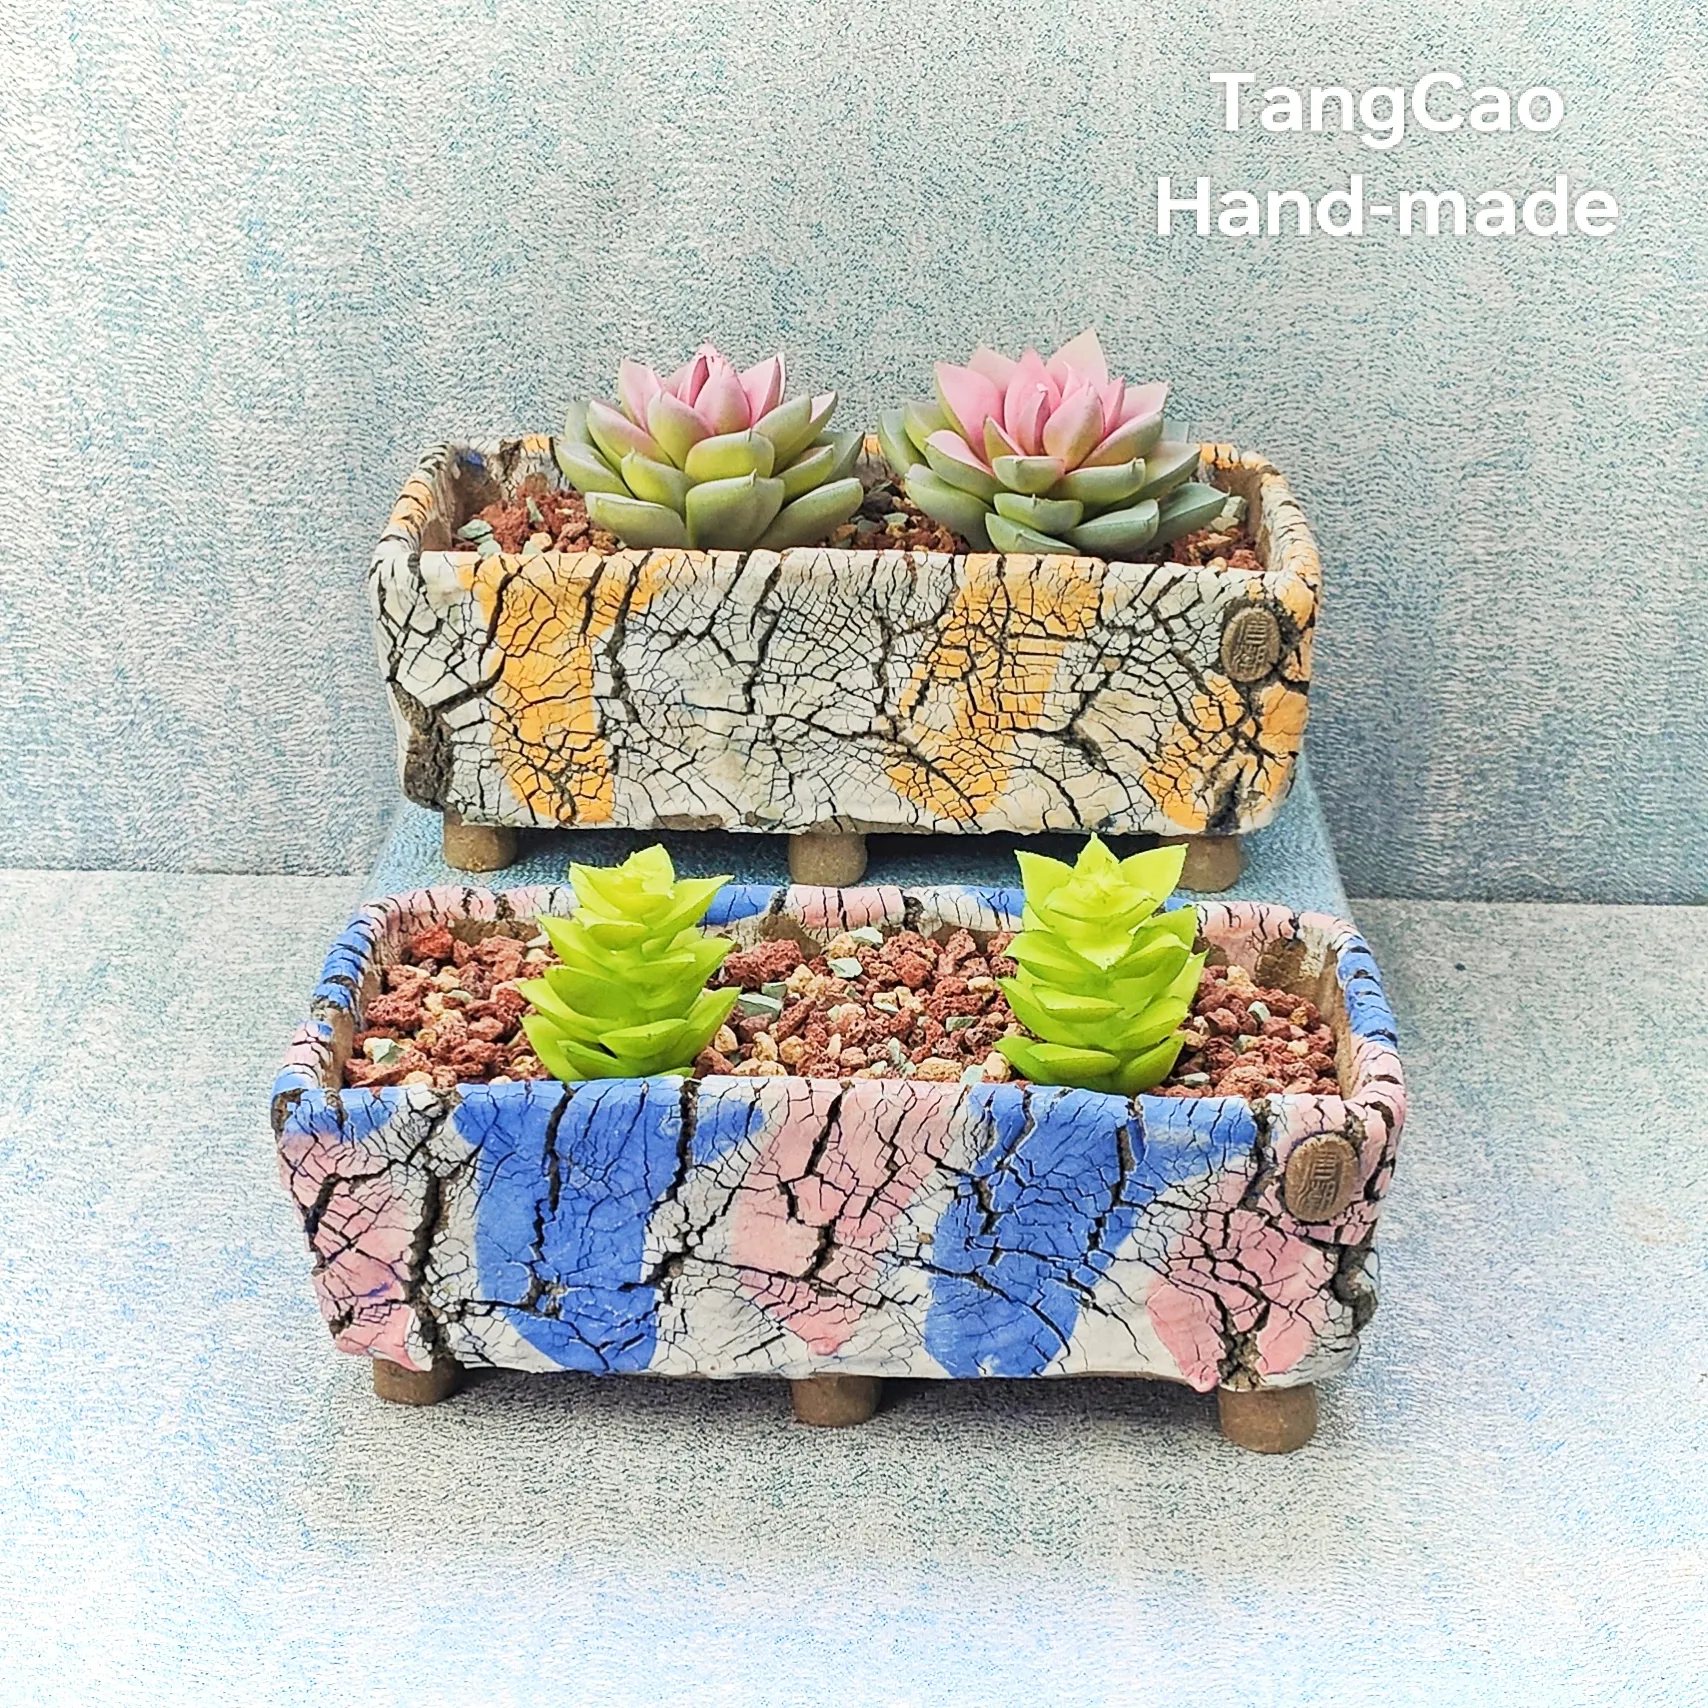 TangCao, cerámica Manual creativa, 7 pulgadas, rectangular, colorido, estilo chino, patrón de ráfaga, maceta de cerámica, macetas de jardín para bonsái